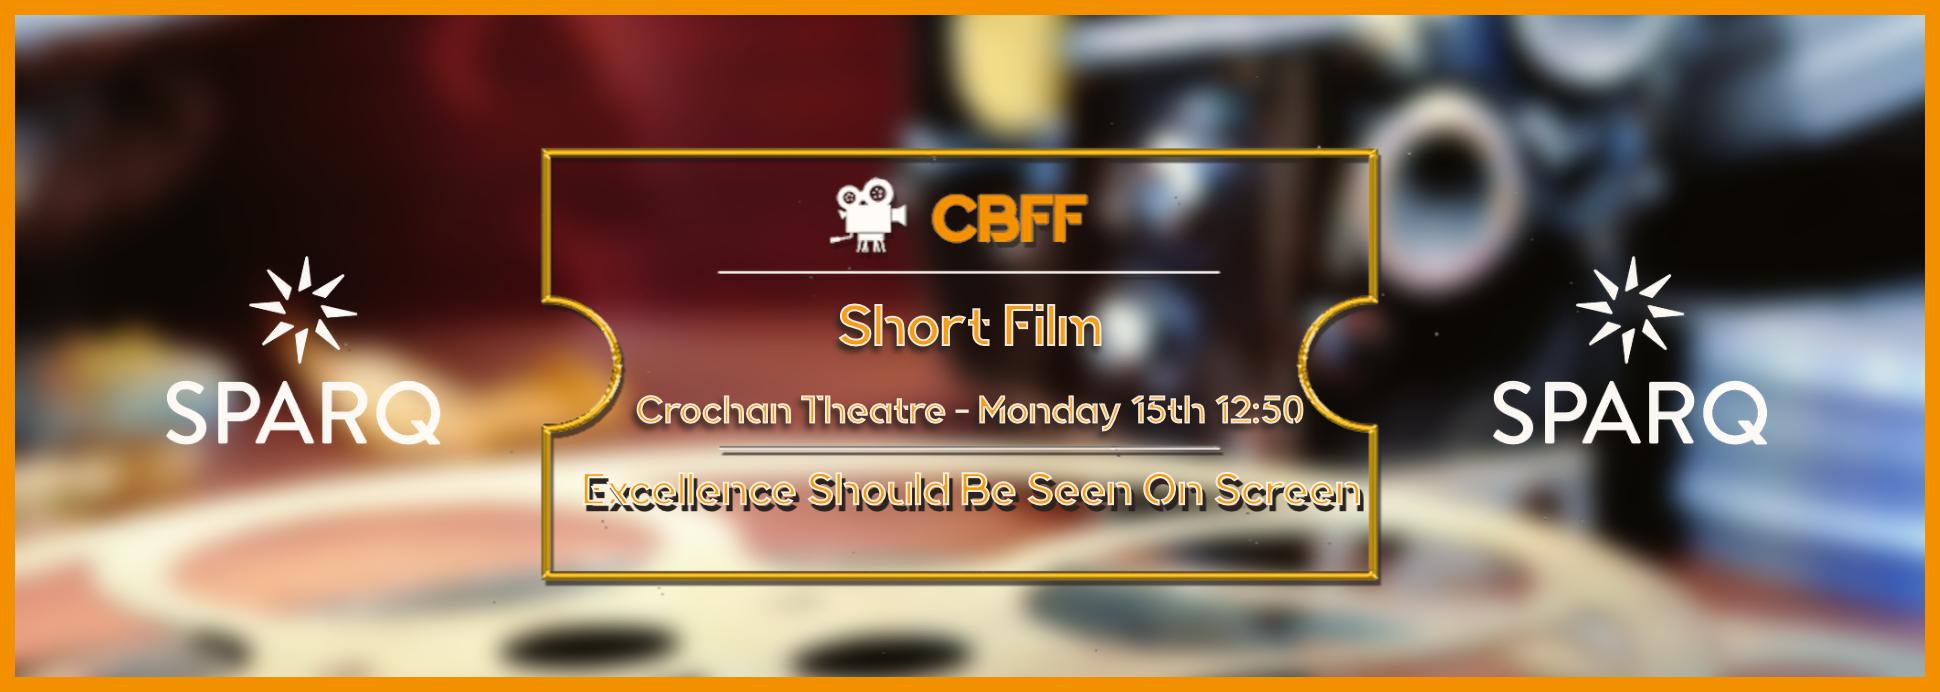 Crochan Foreign Short Film 15th 12:50